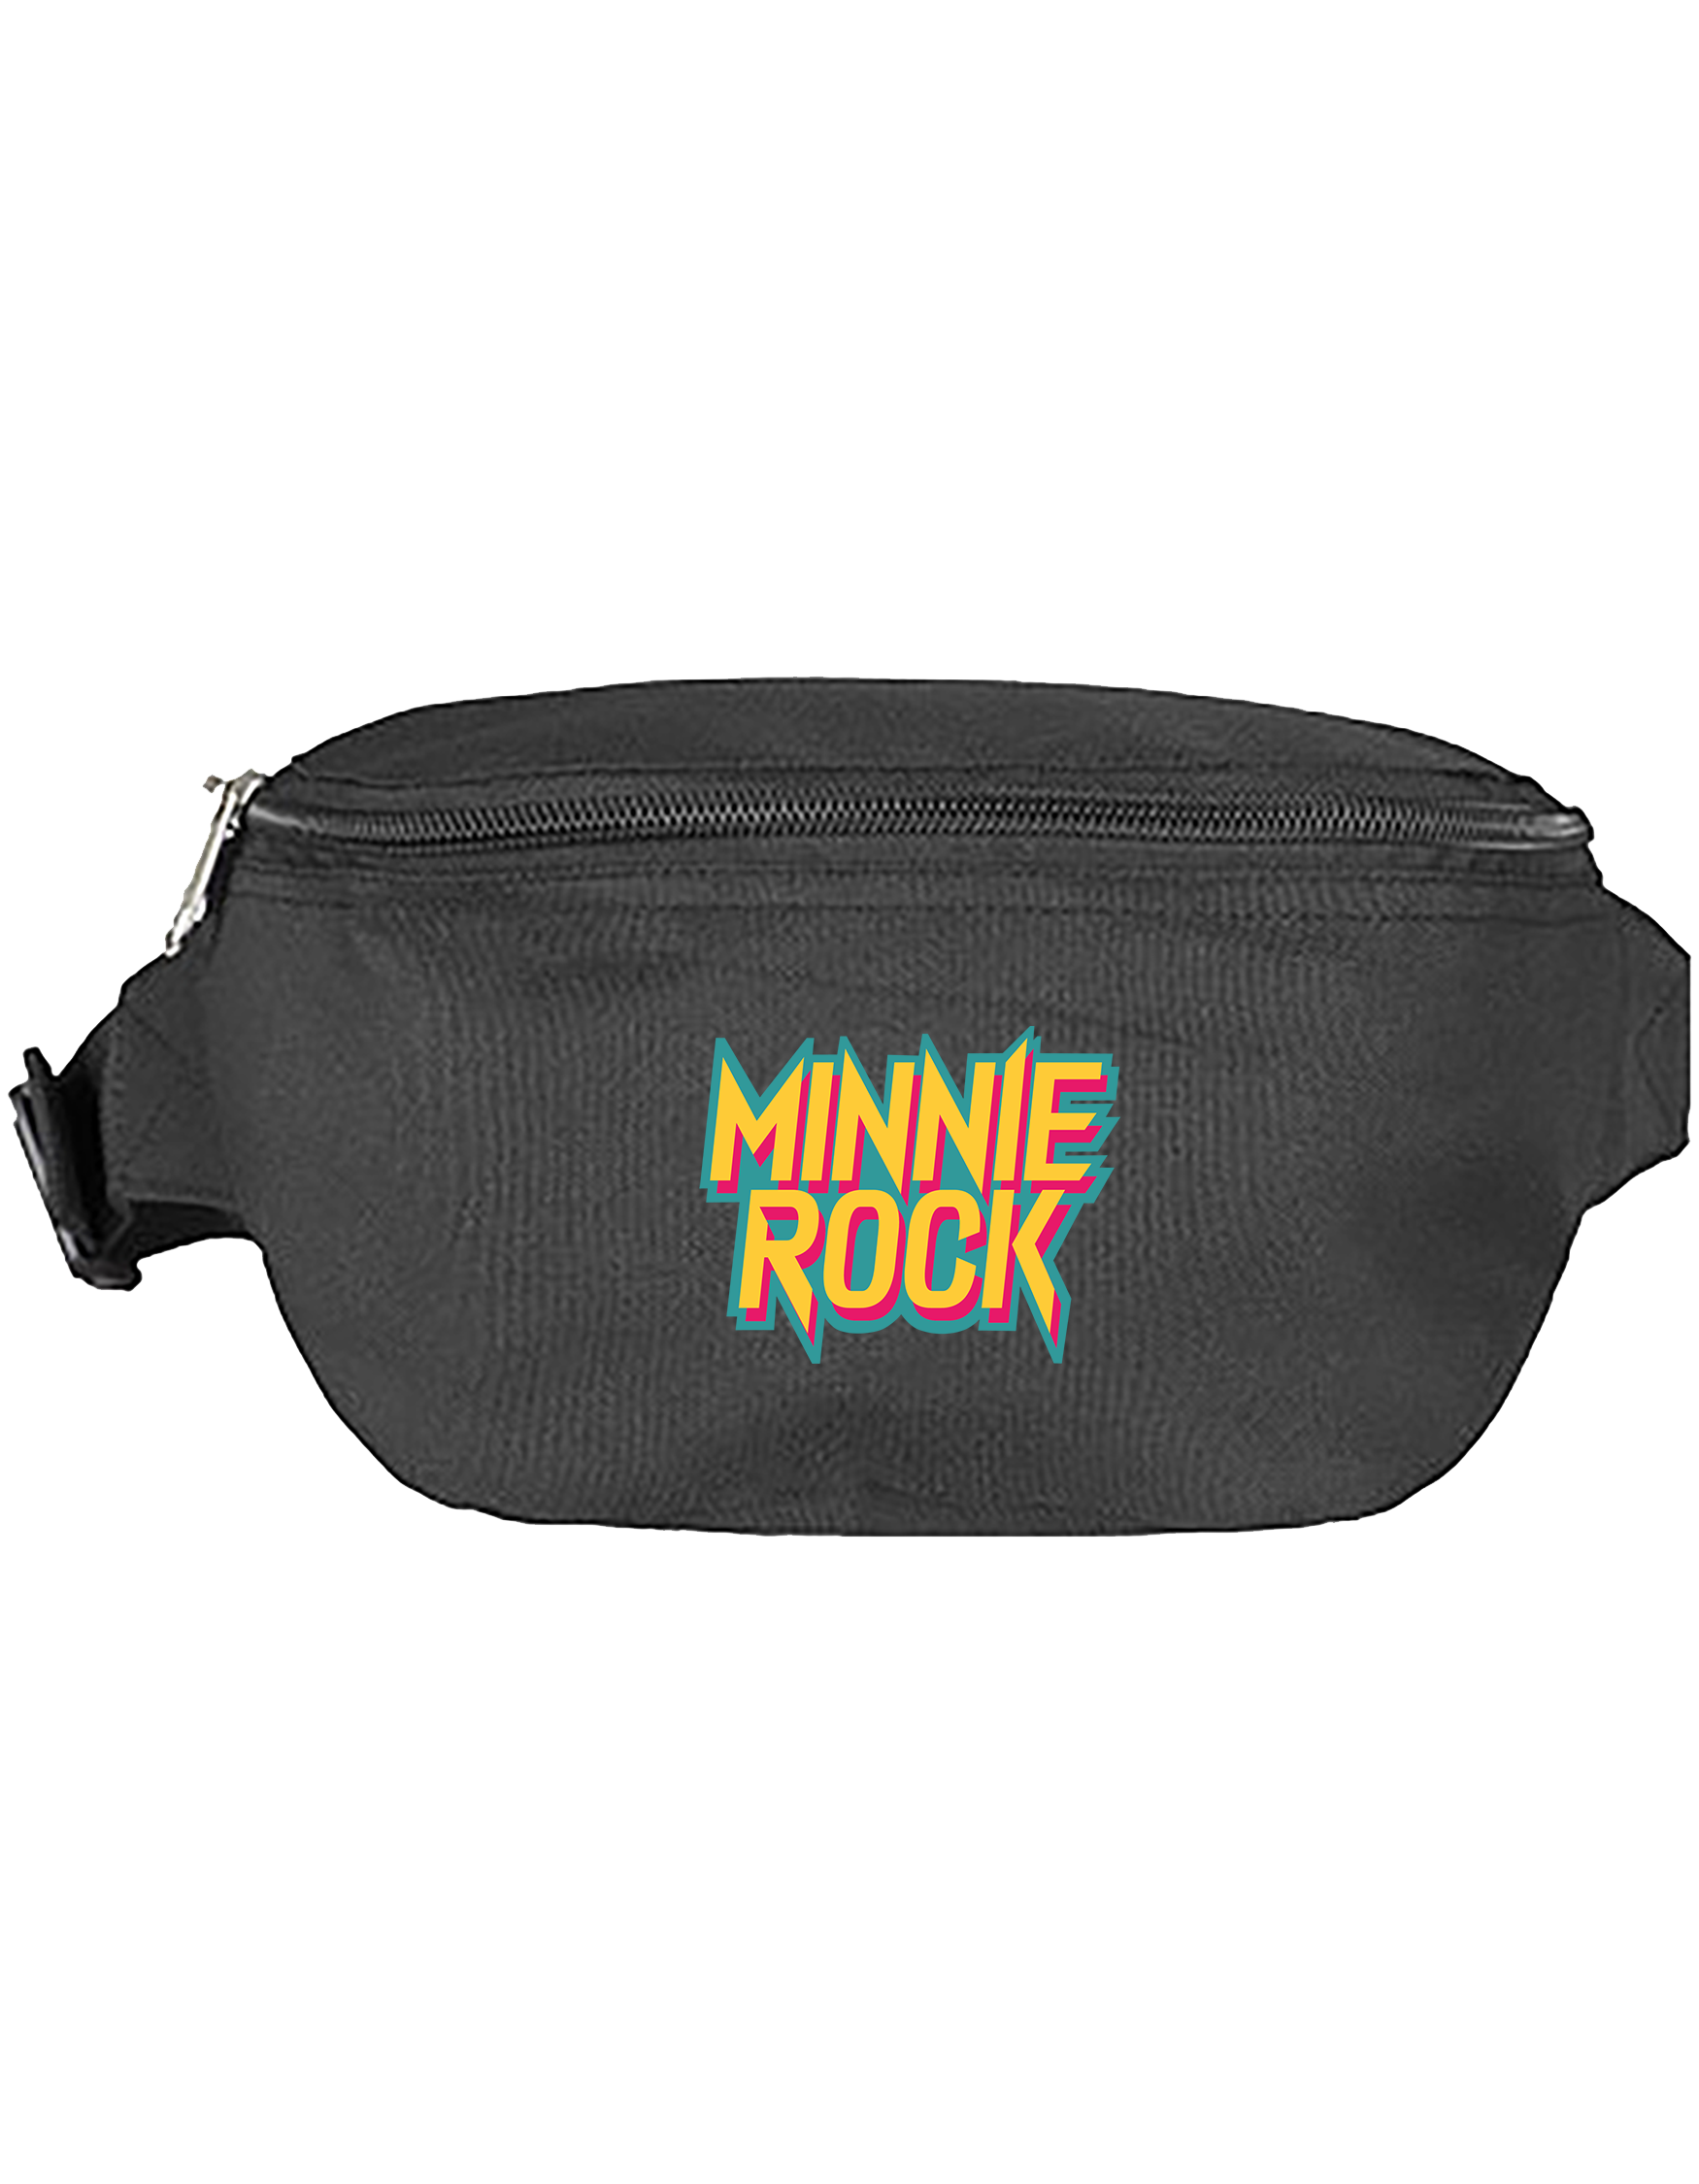 minnie rock - Retro Hip Bag [schwarz]